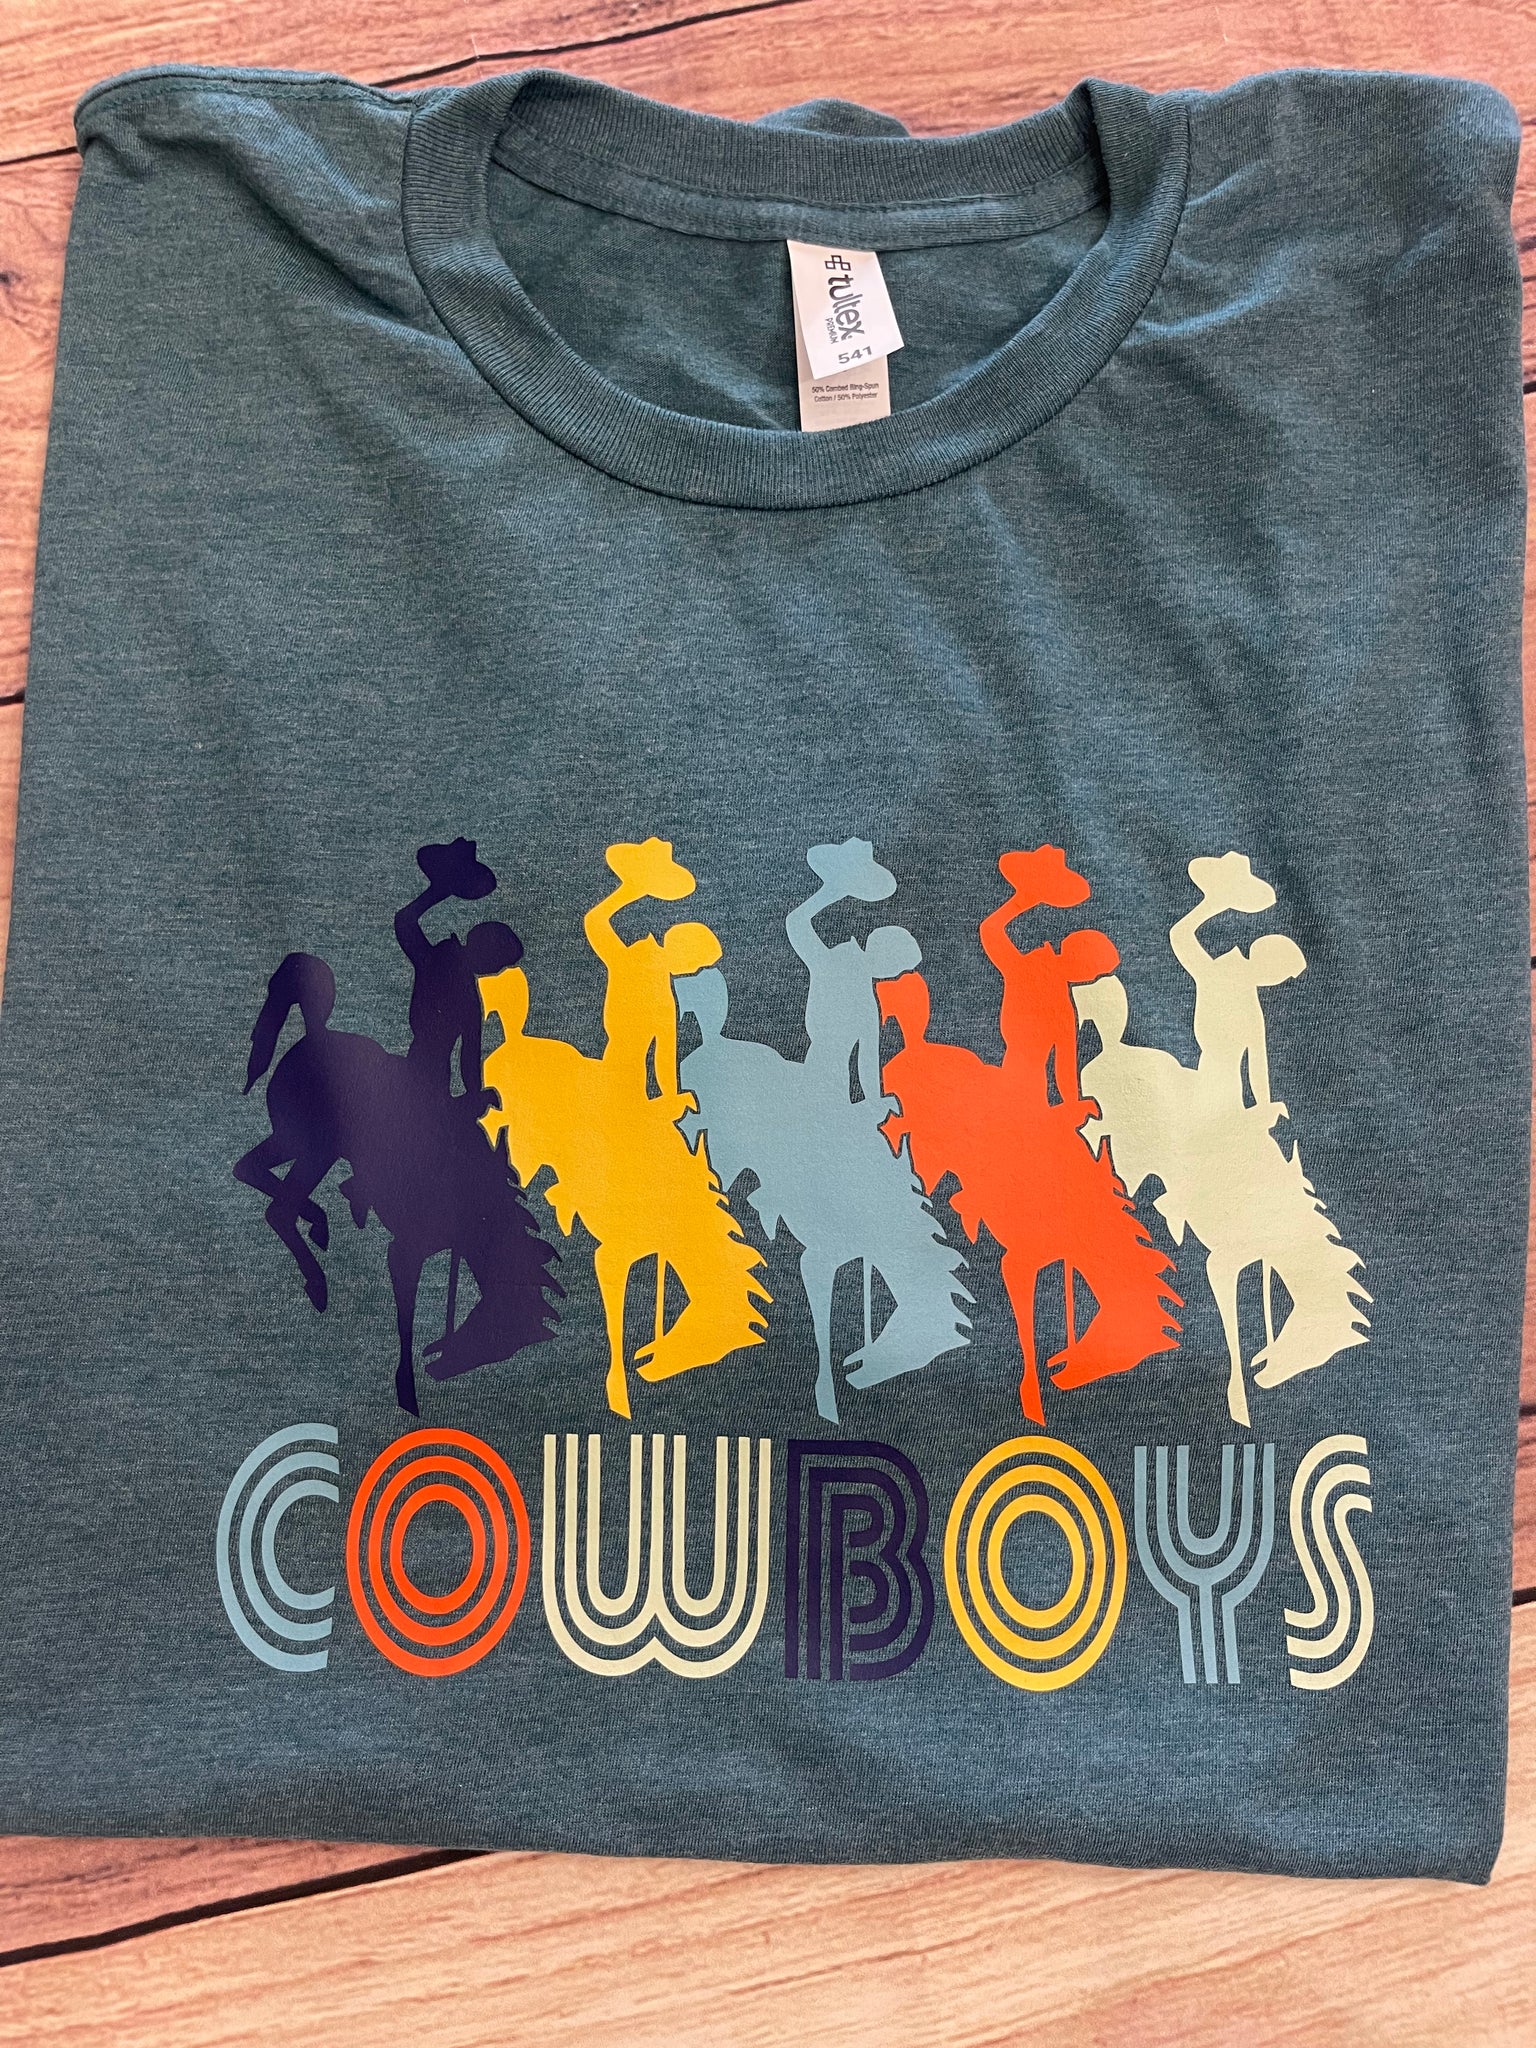 Colorful Cowboys Tee